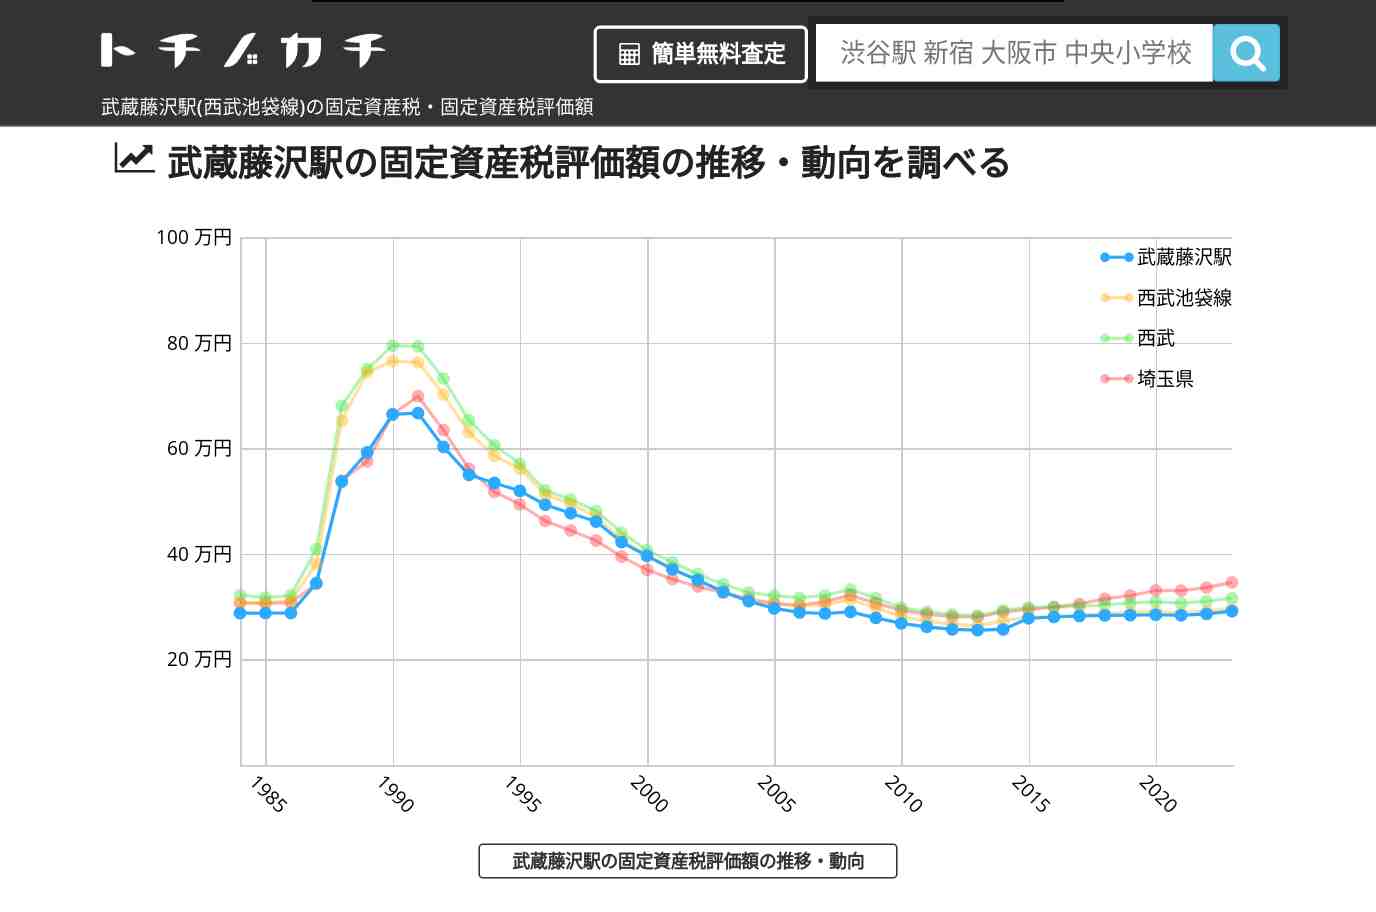 武蔵藤沢駅(西武池袋線)の固定資産税・固定資産税評価額 | トチノカチ